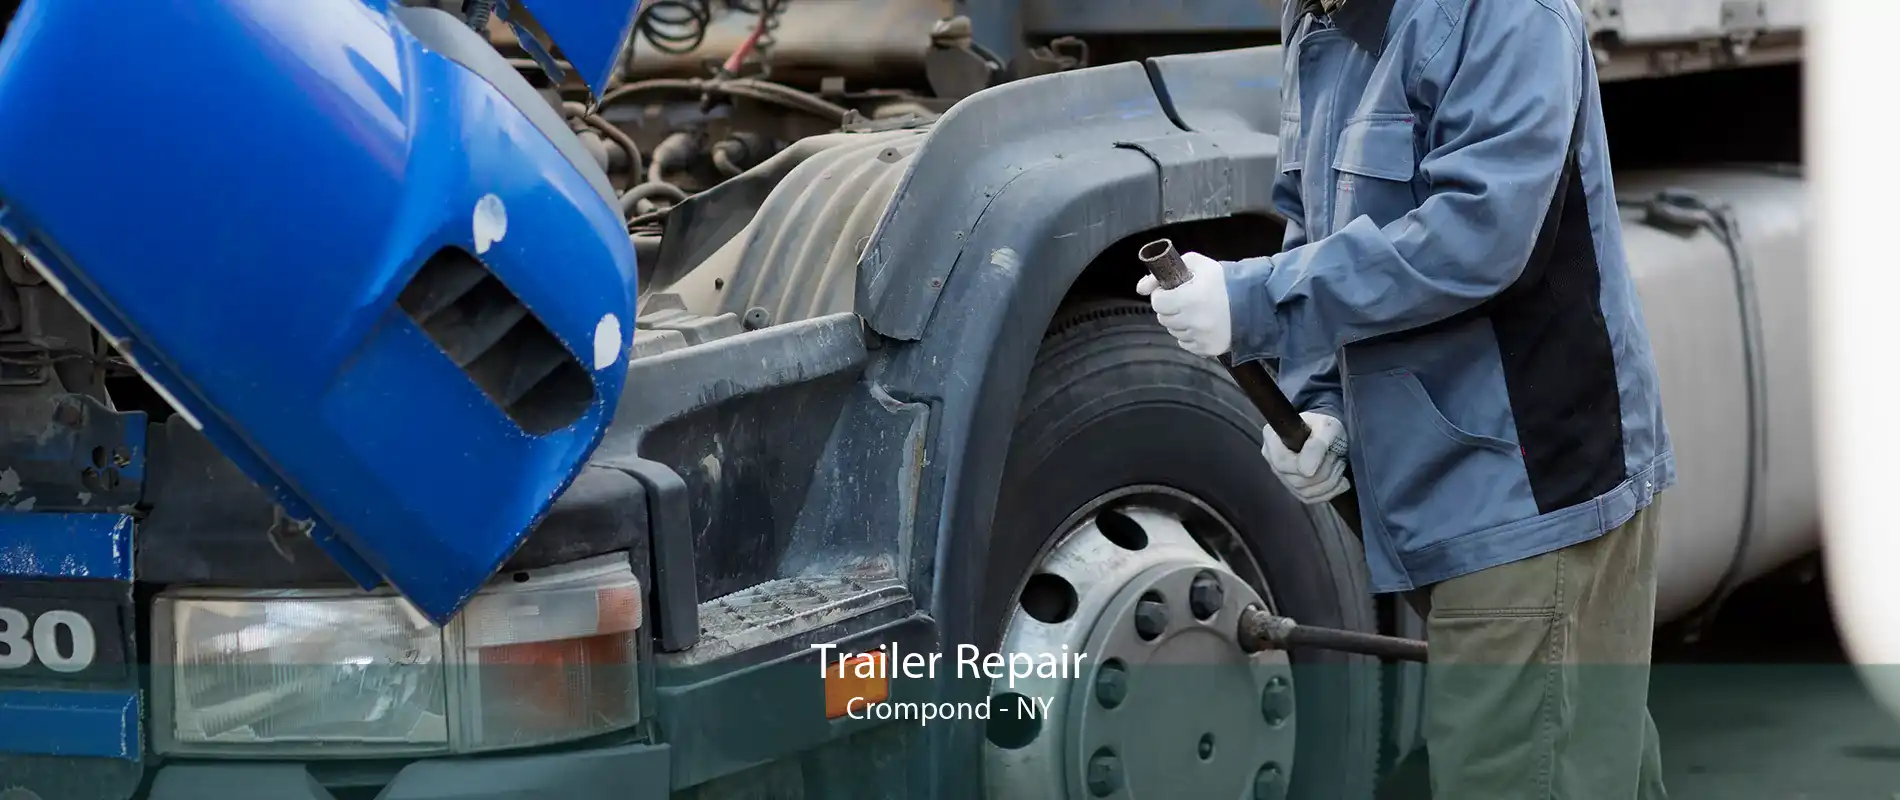 Trailer Repair Crompond - NY